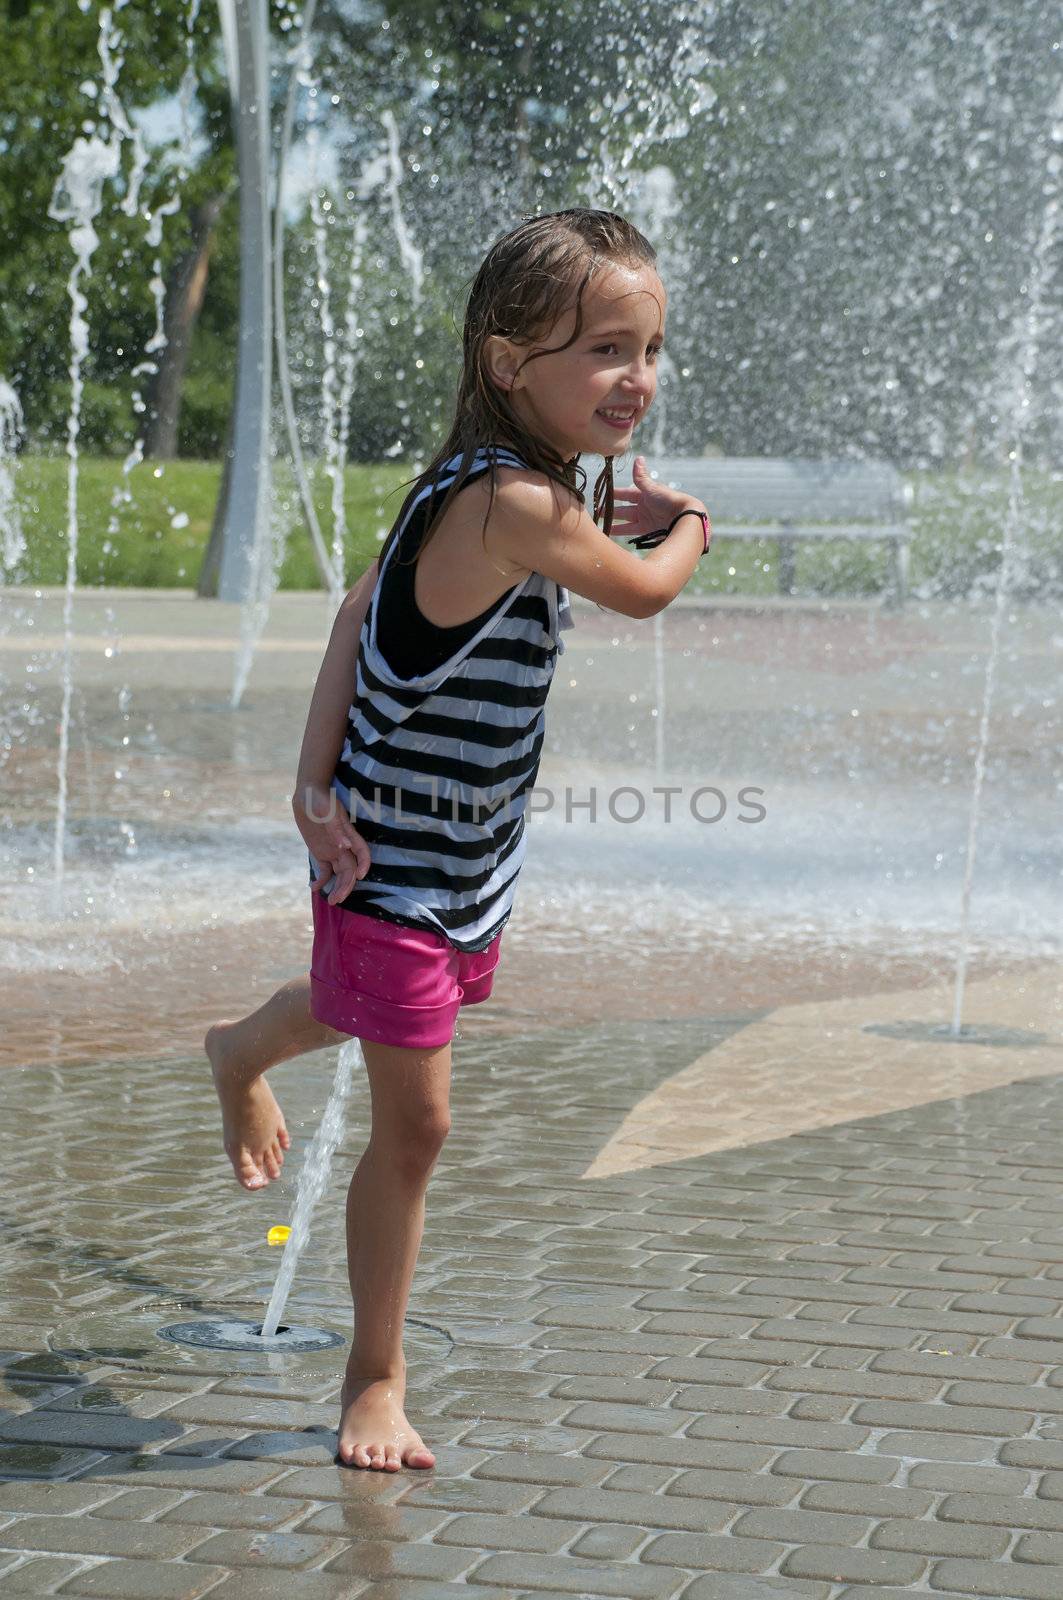 kids having summer fun outdoors at the park